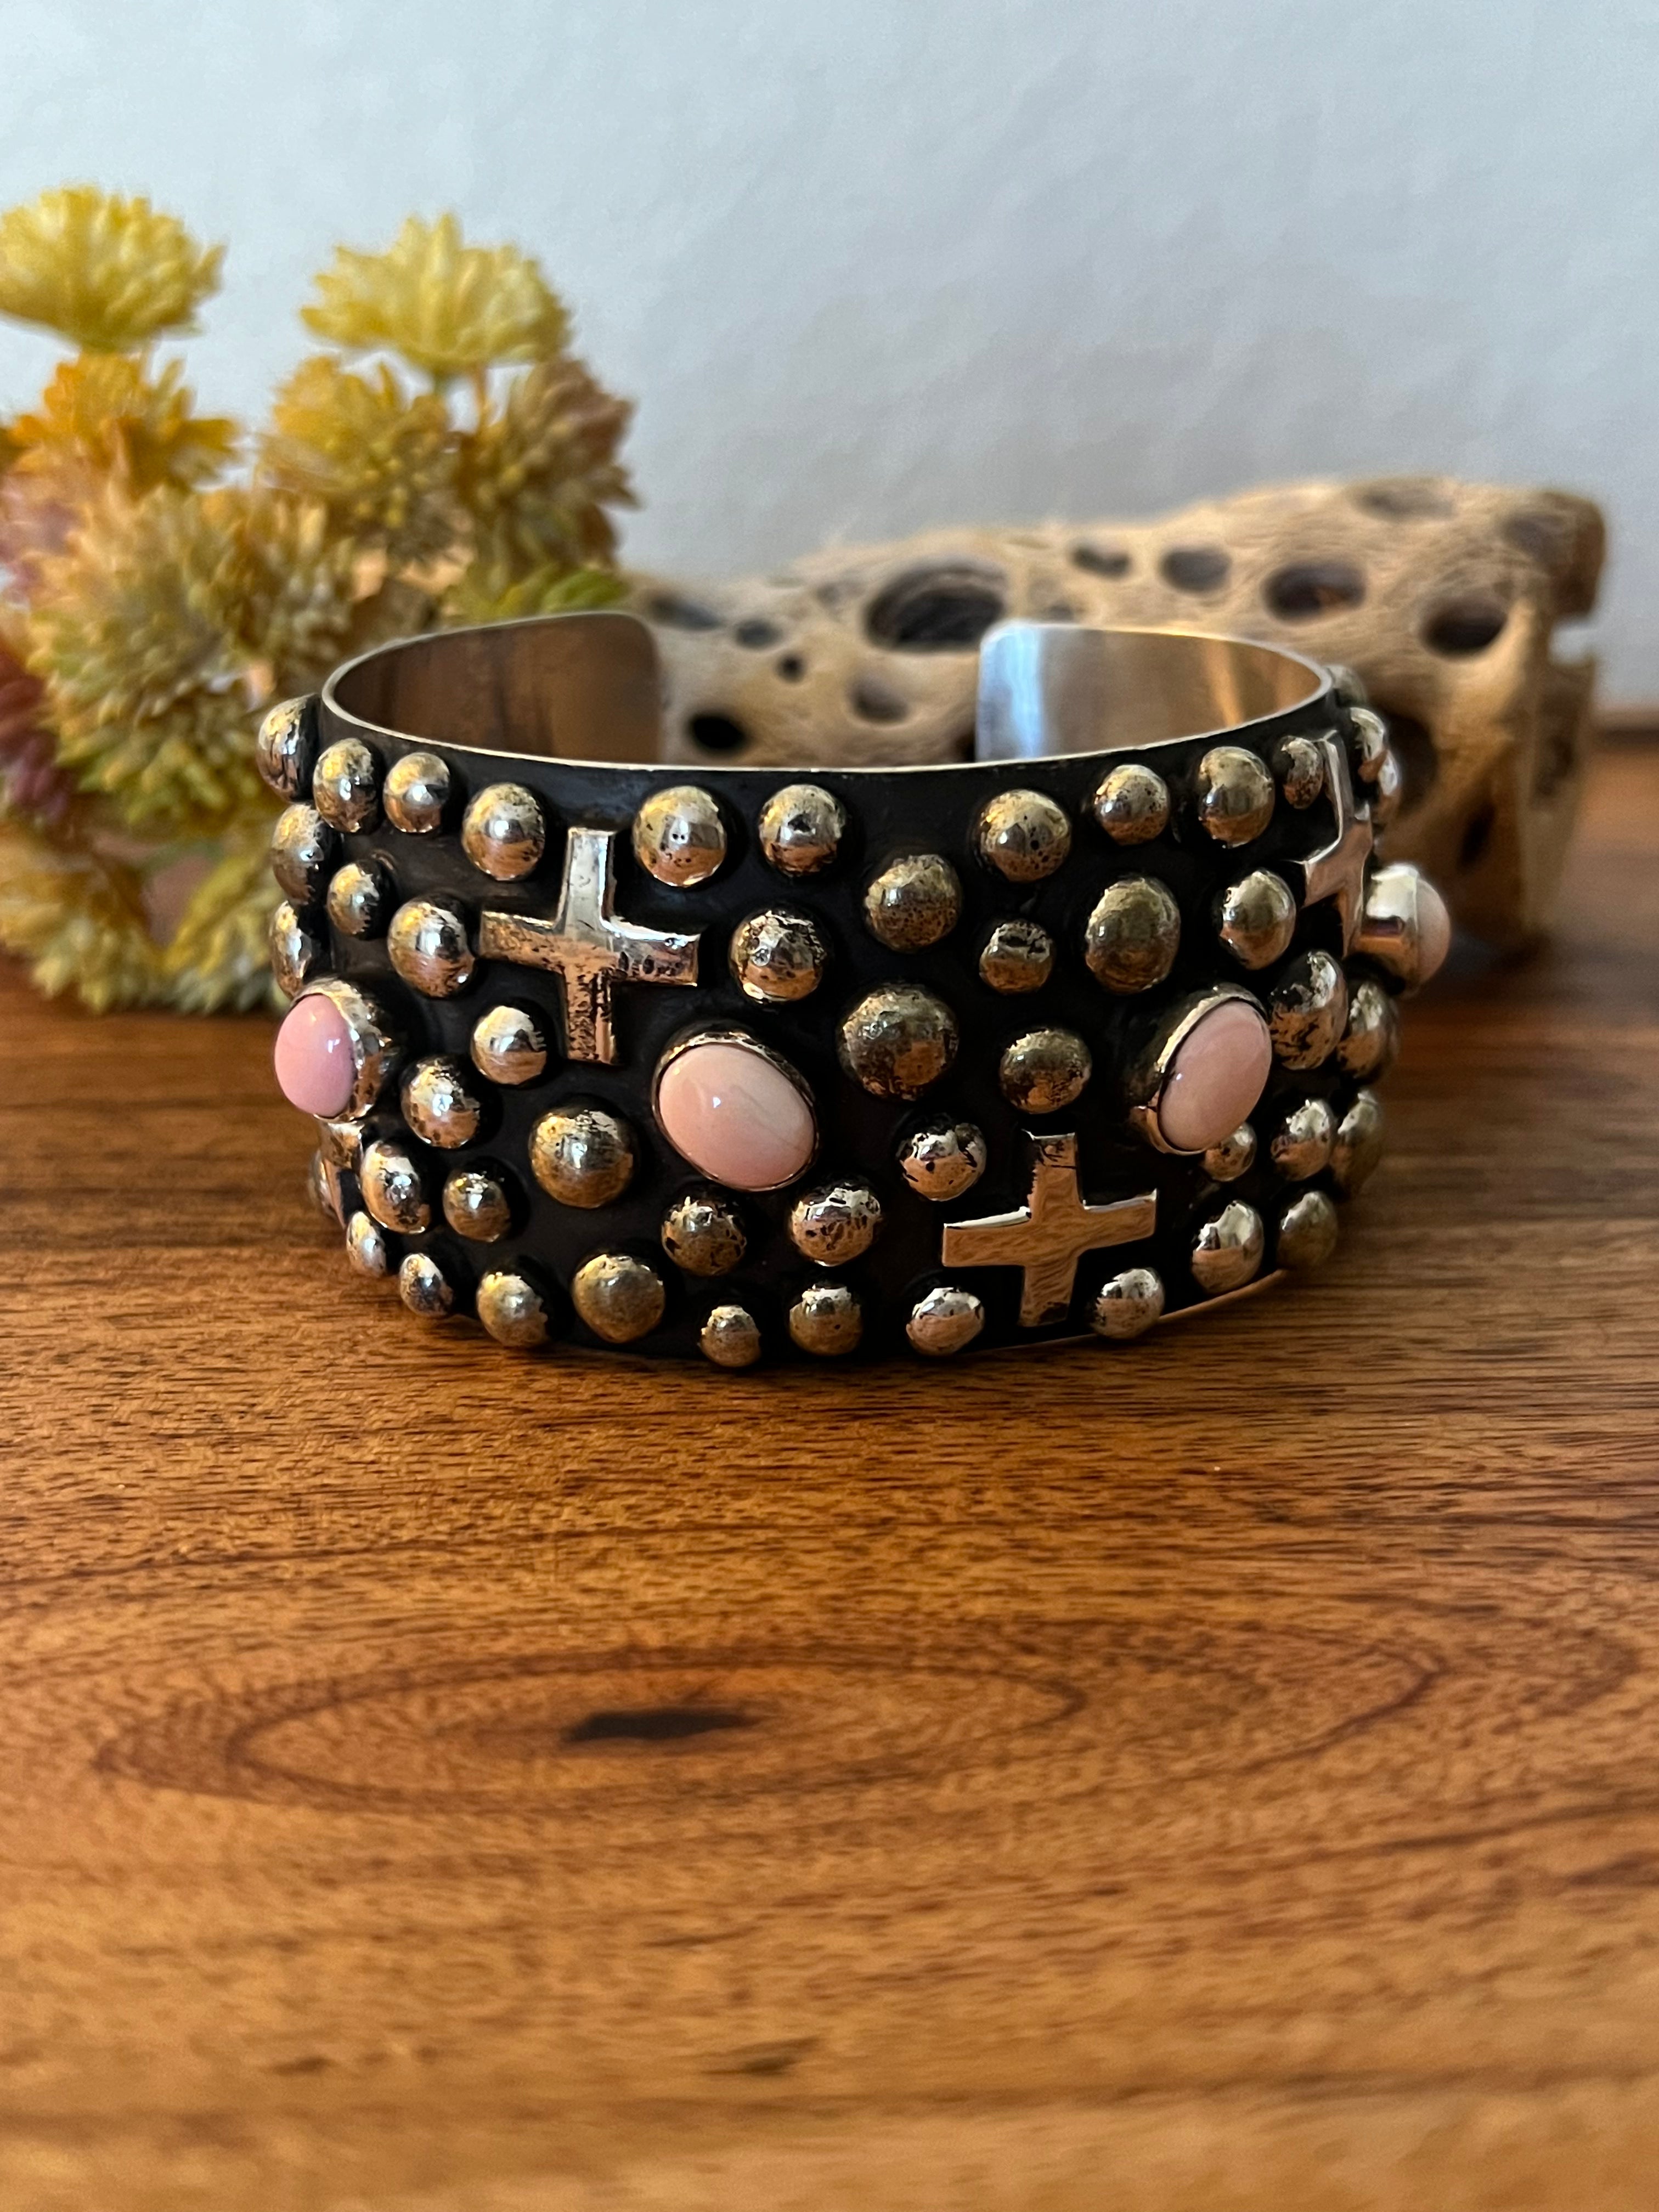 Chimney Butte Pink Conch Shell & Sterling Silver Cuff Bracelet